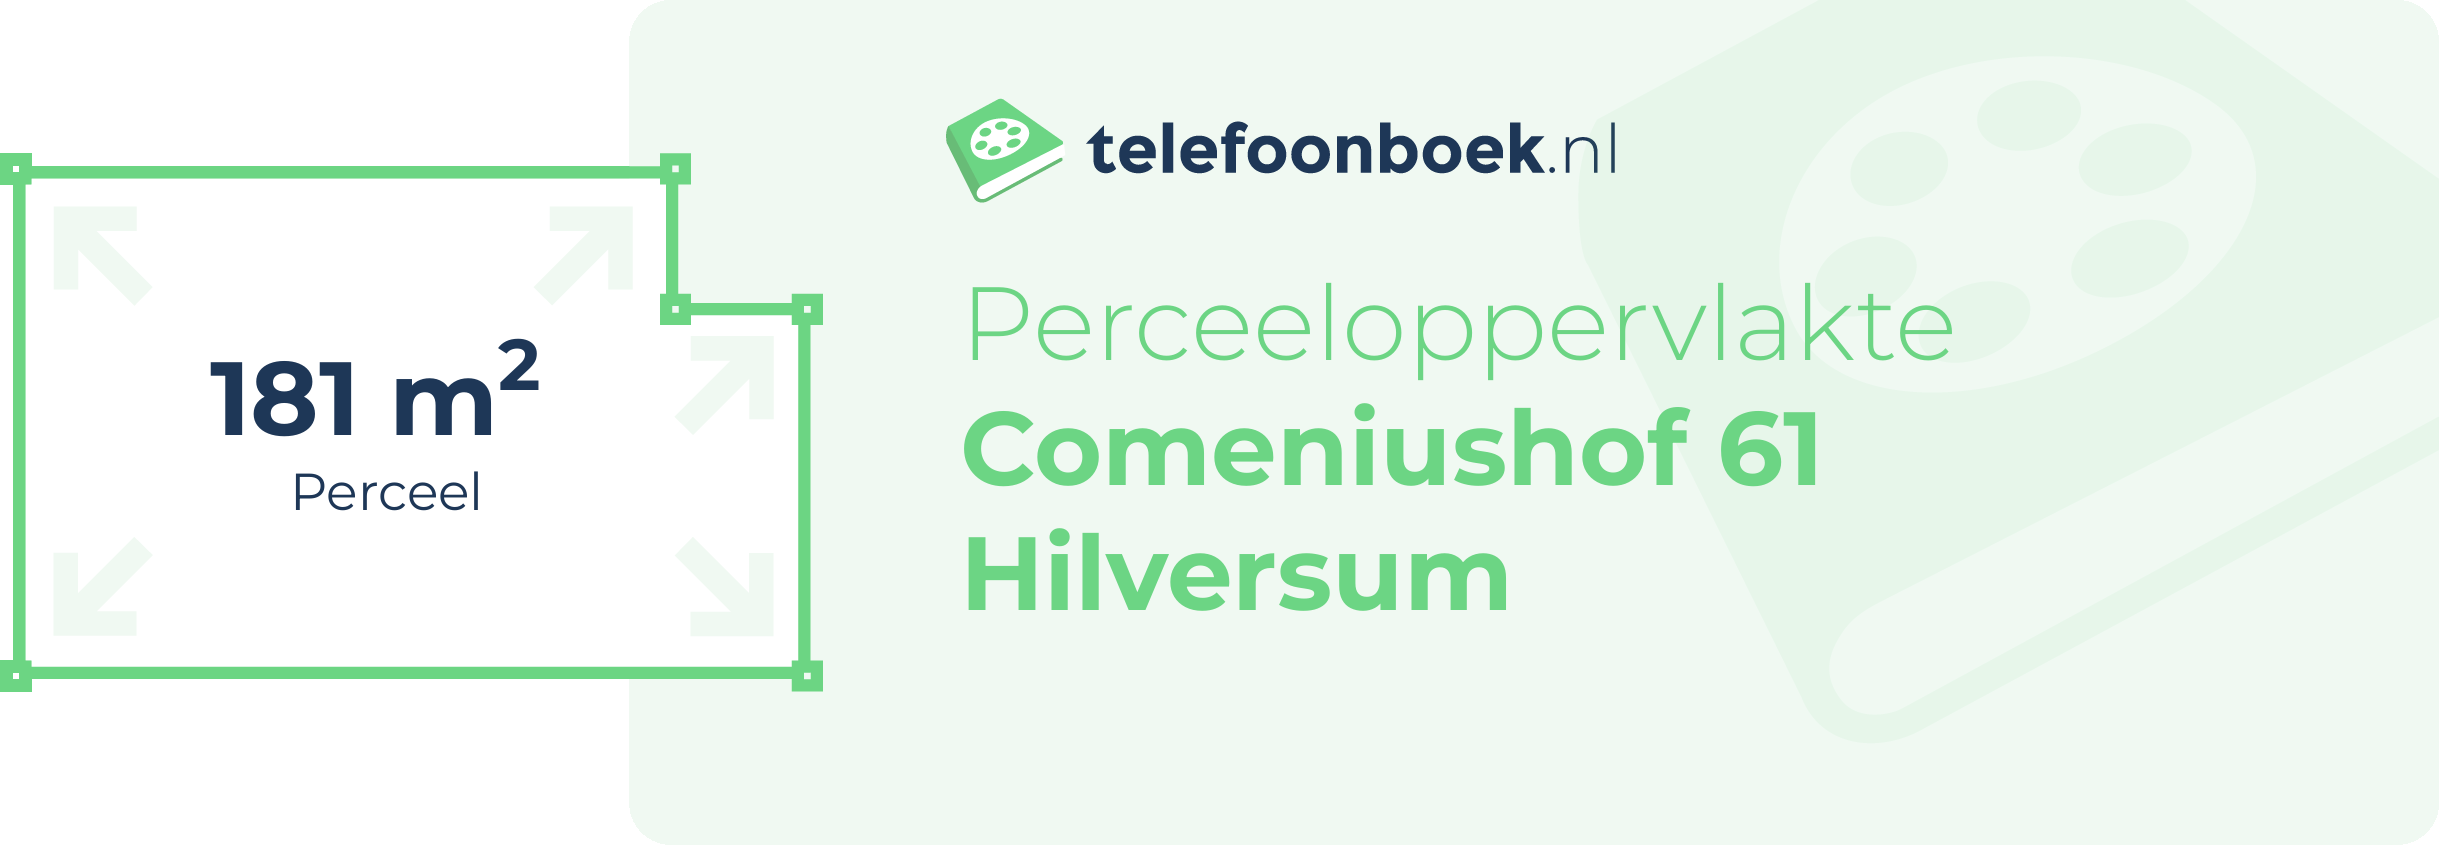 Perceeloppervlakte Comeniushof 61 Hilversum